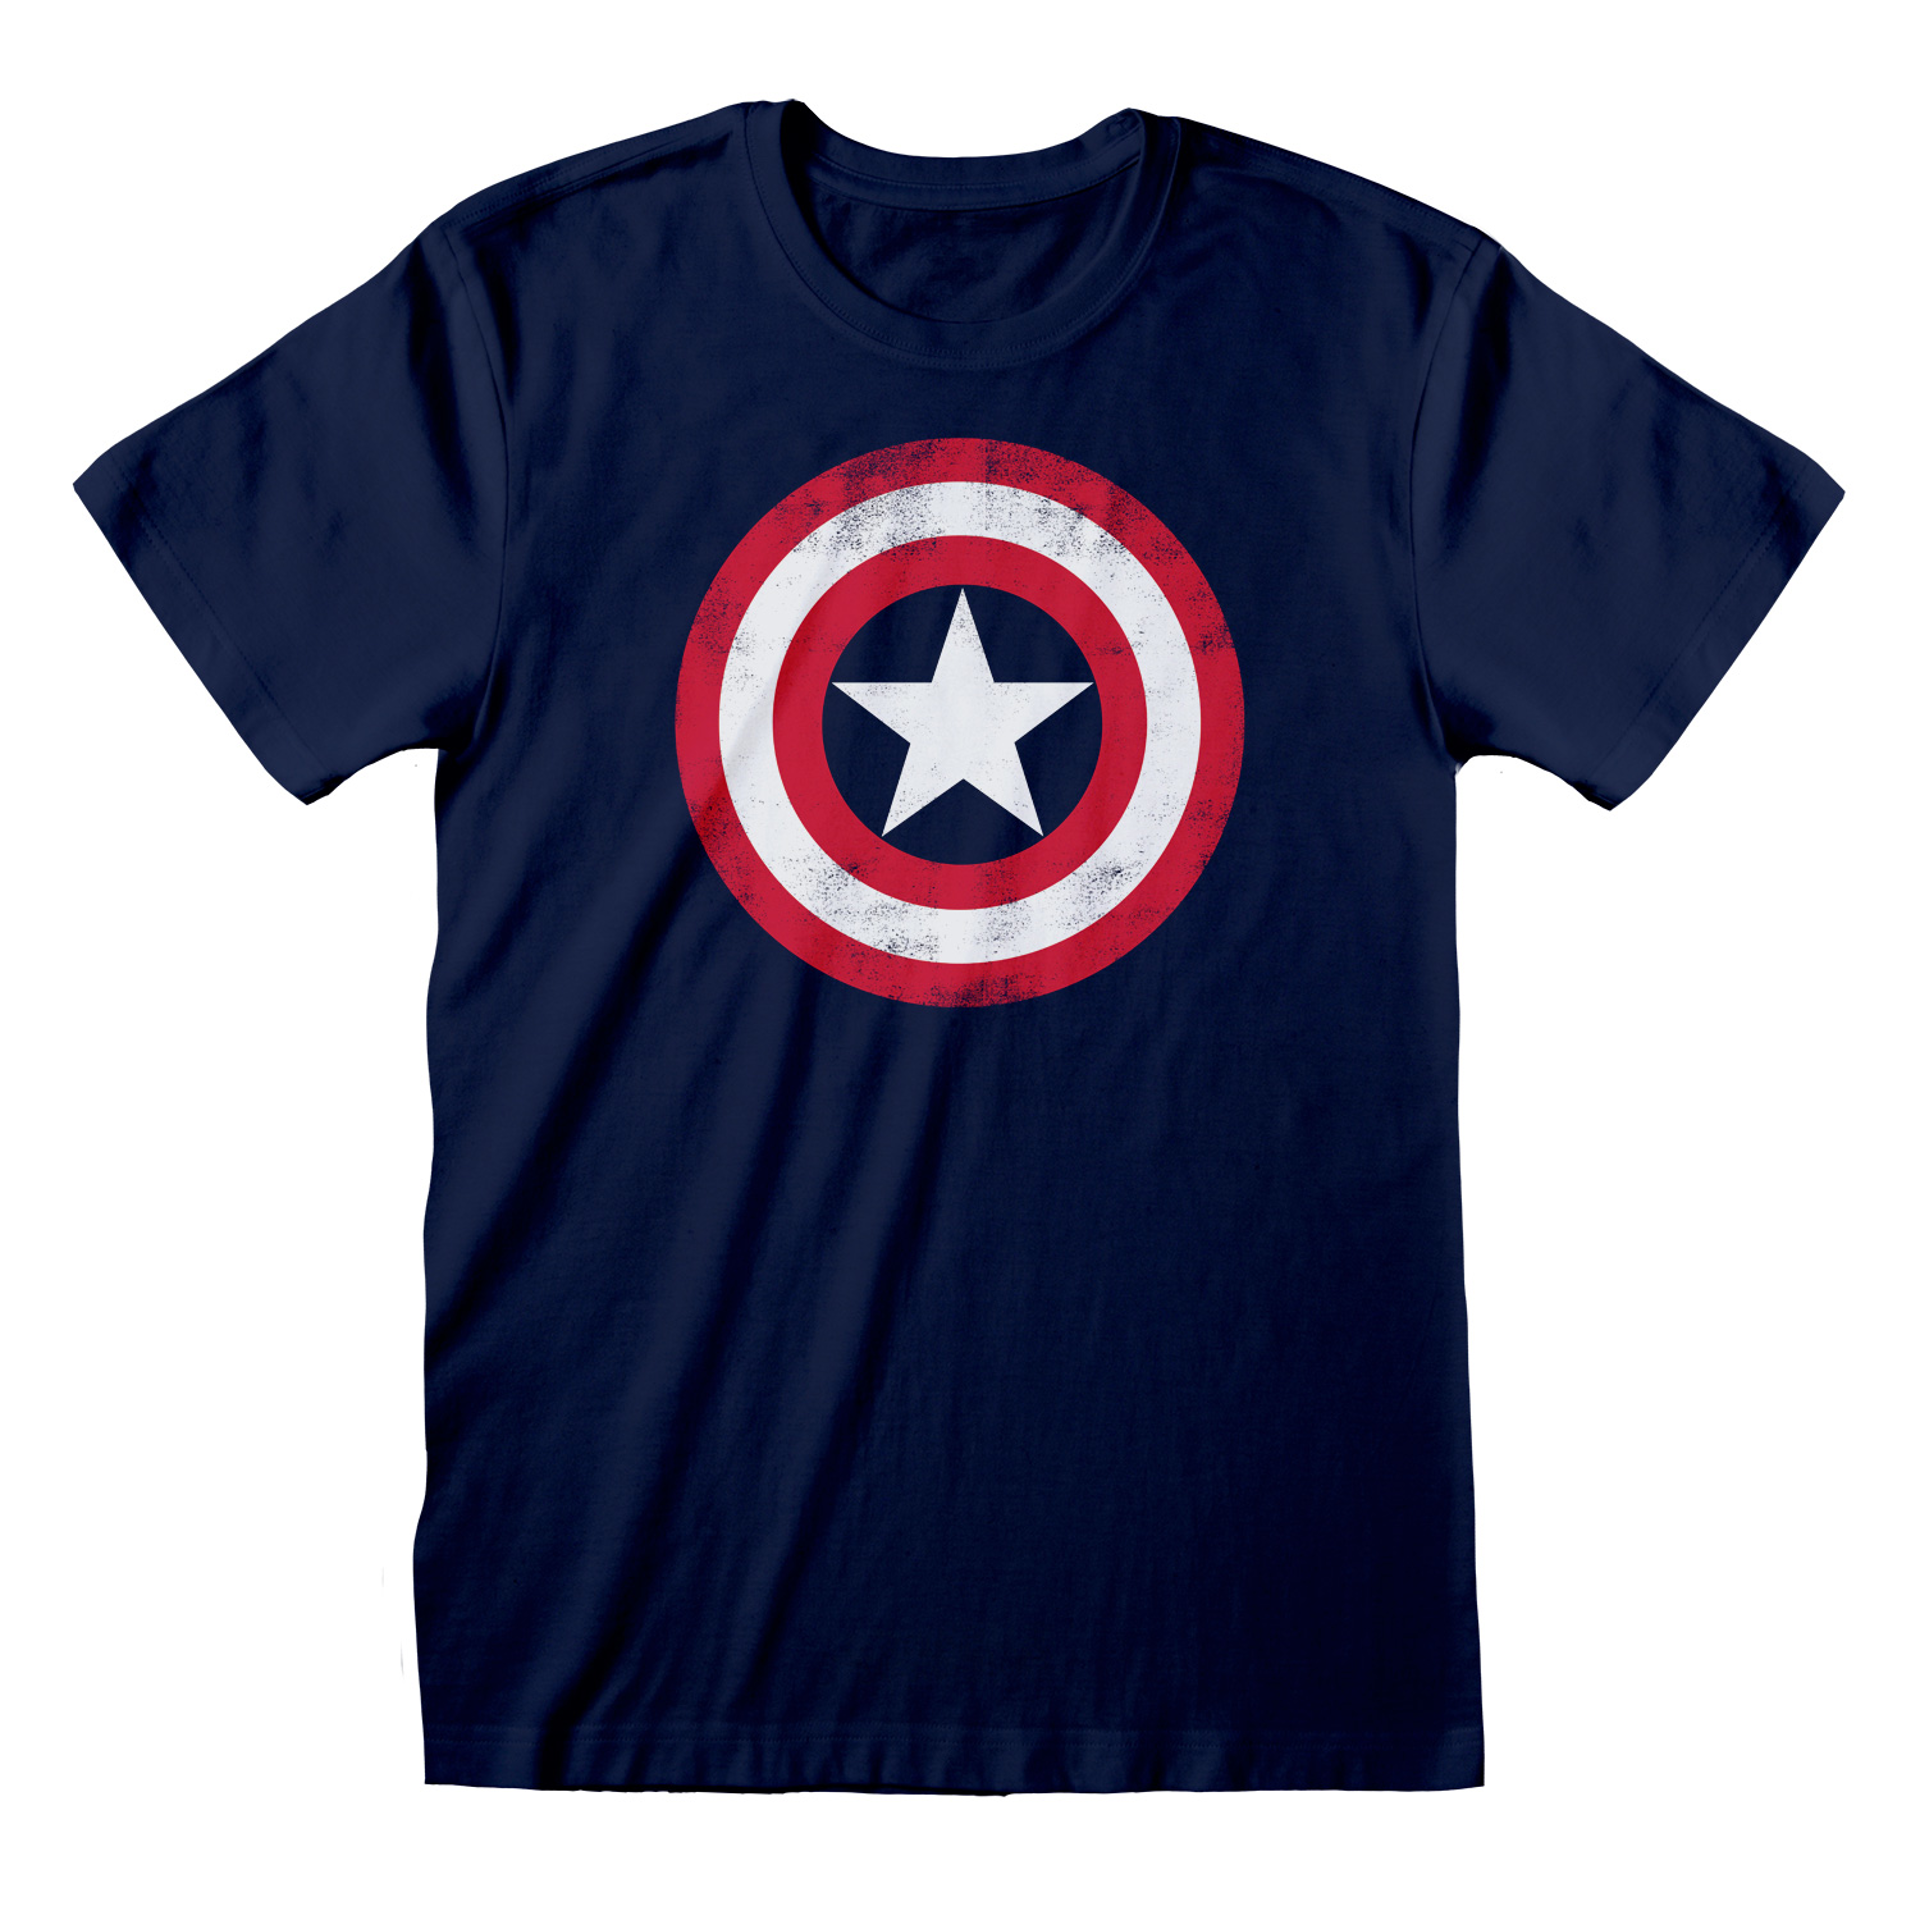 Marvel -  T-shirt unisexe Bleu Marine Logo vieilli du bouclier de Captain America - L